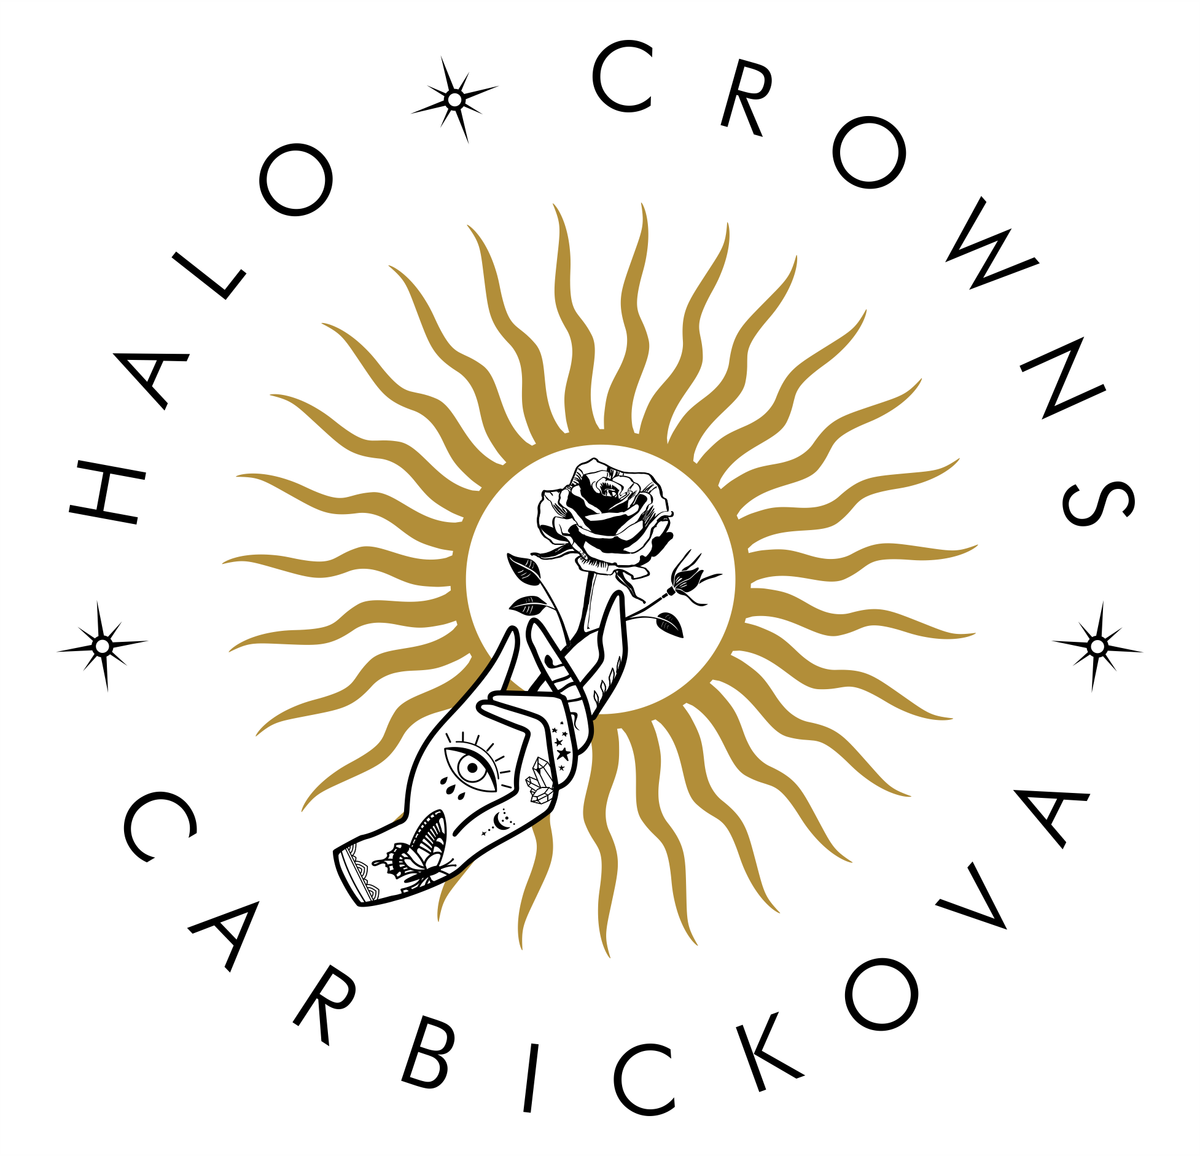 CARBICKOVA CROWNS